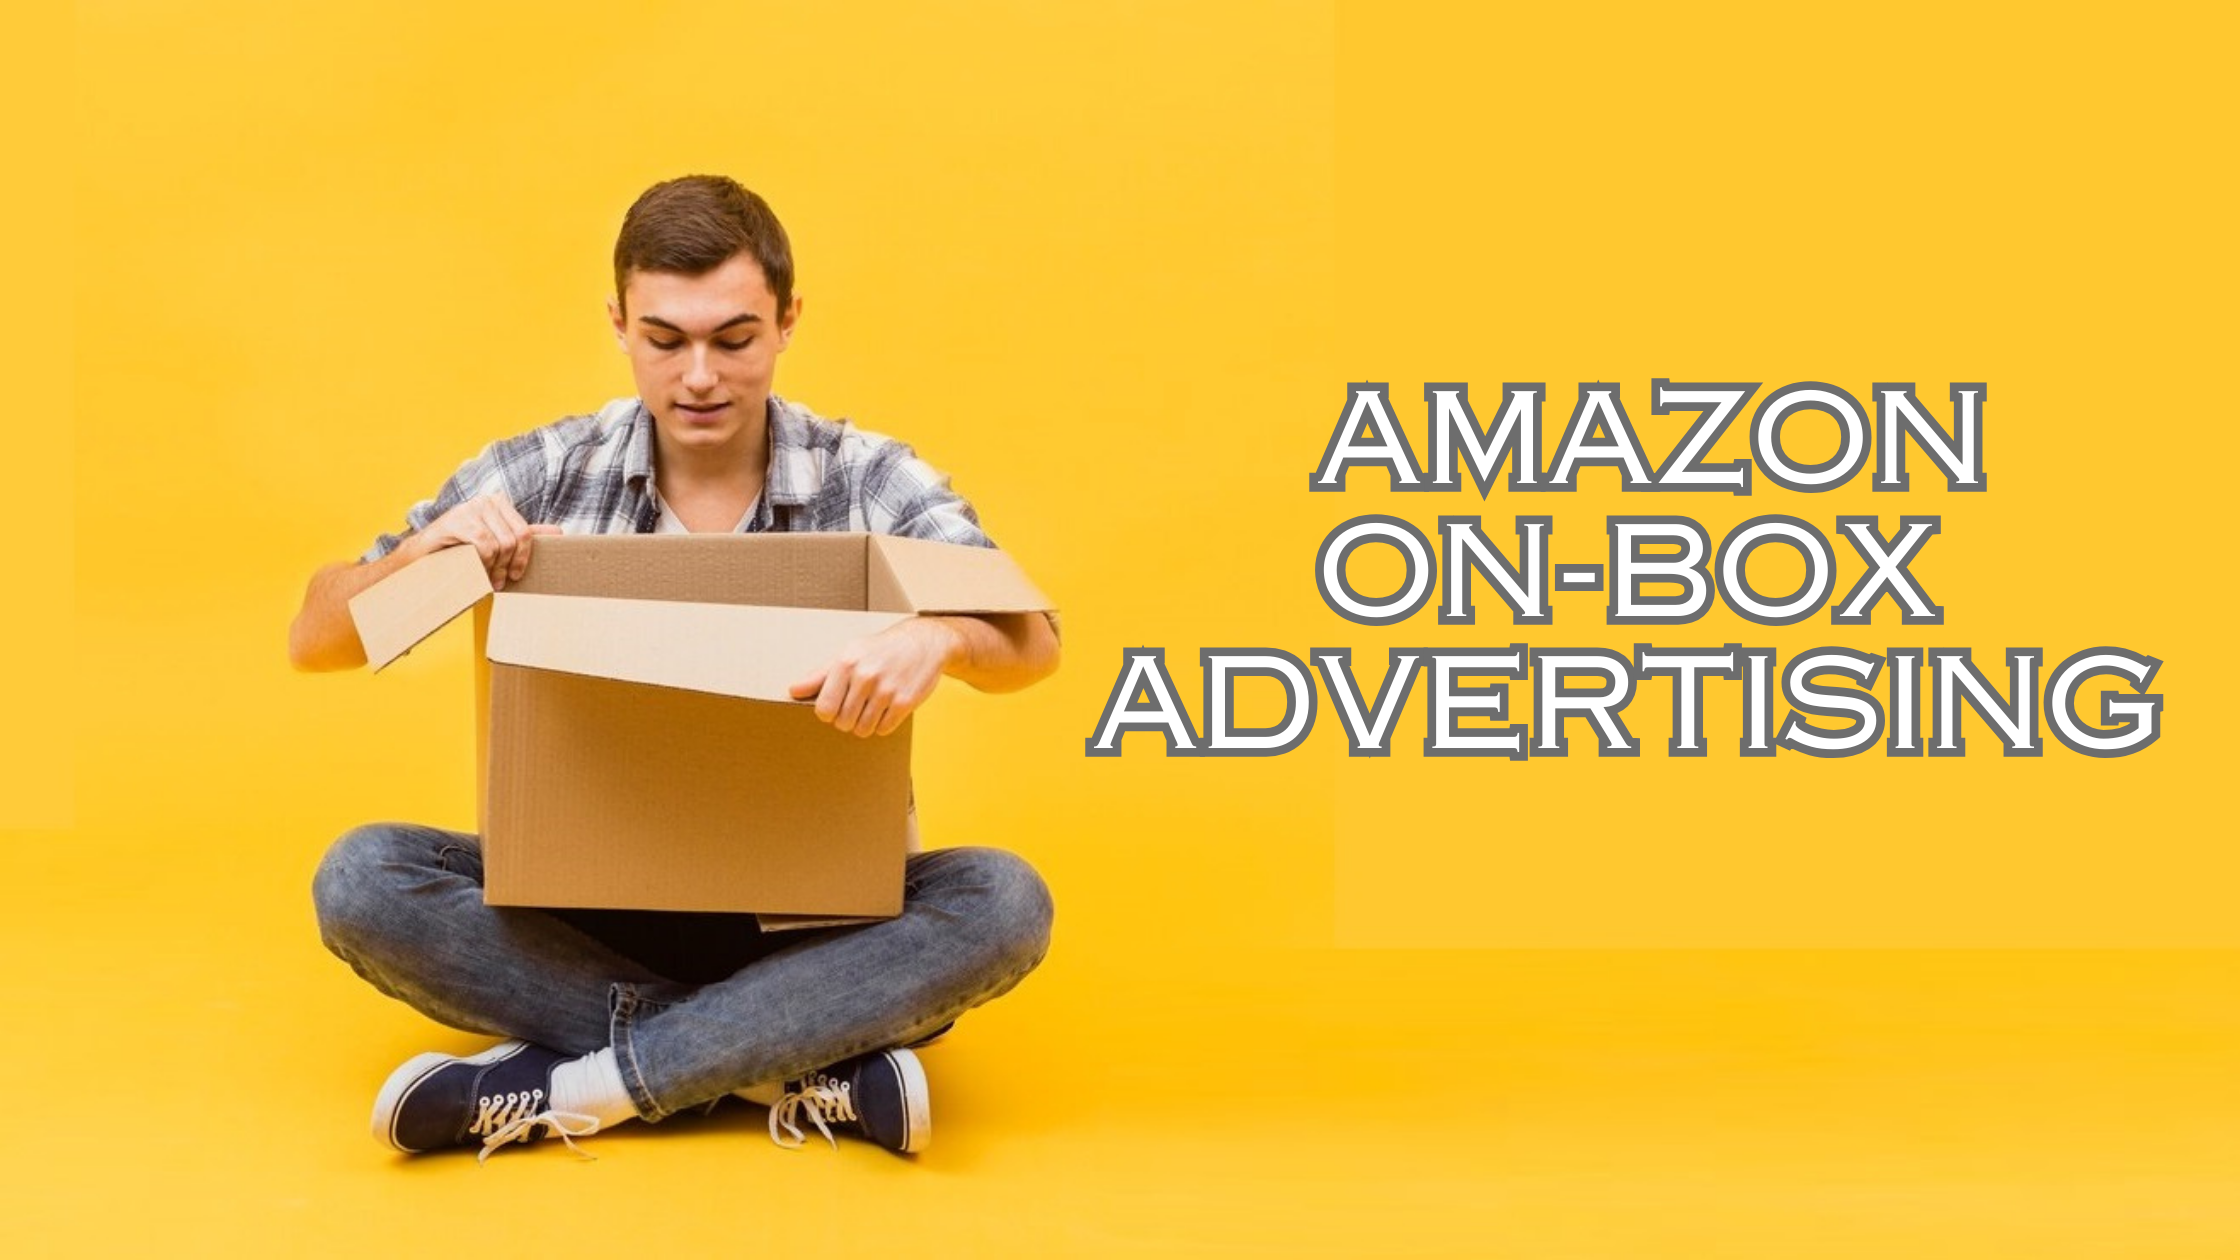 Amazon On-Box Advertising